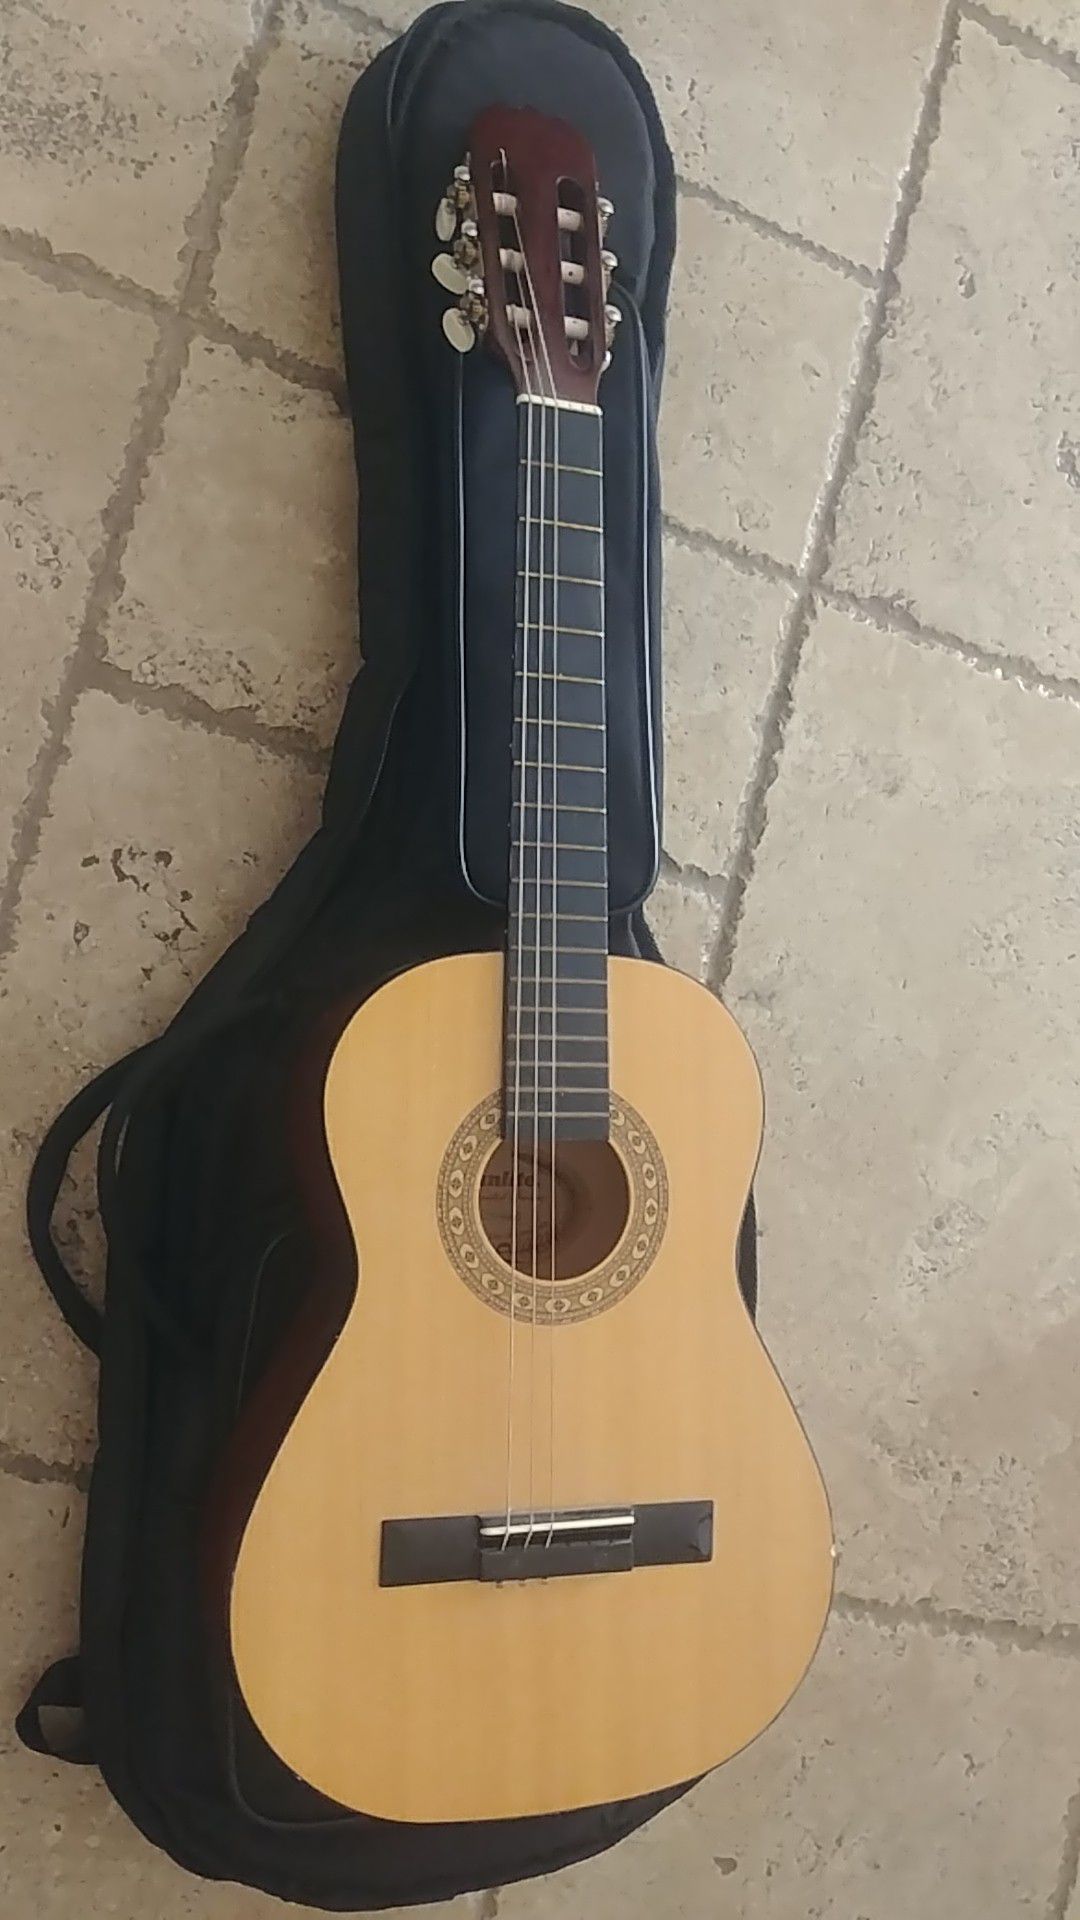 Small guitar with bag And Tamborine